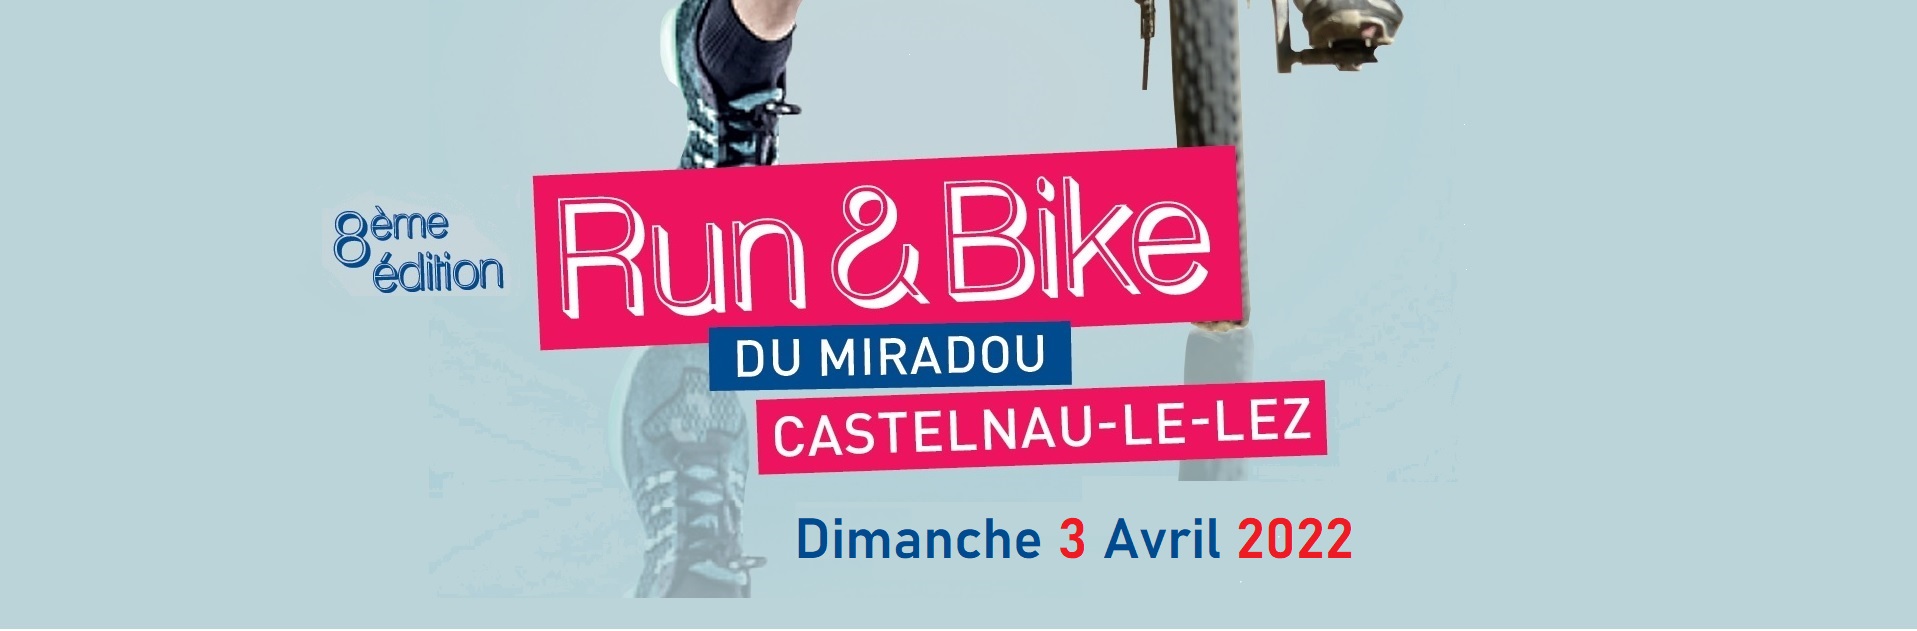 Bannière - Run and Bike